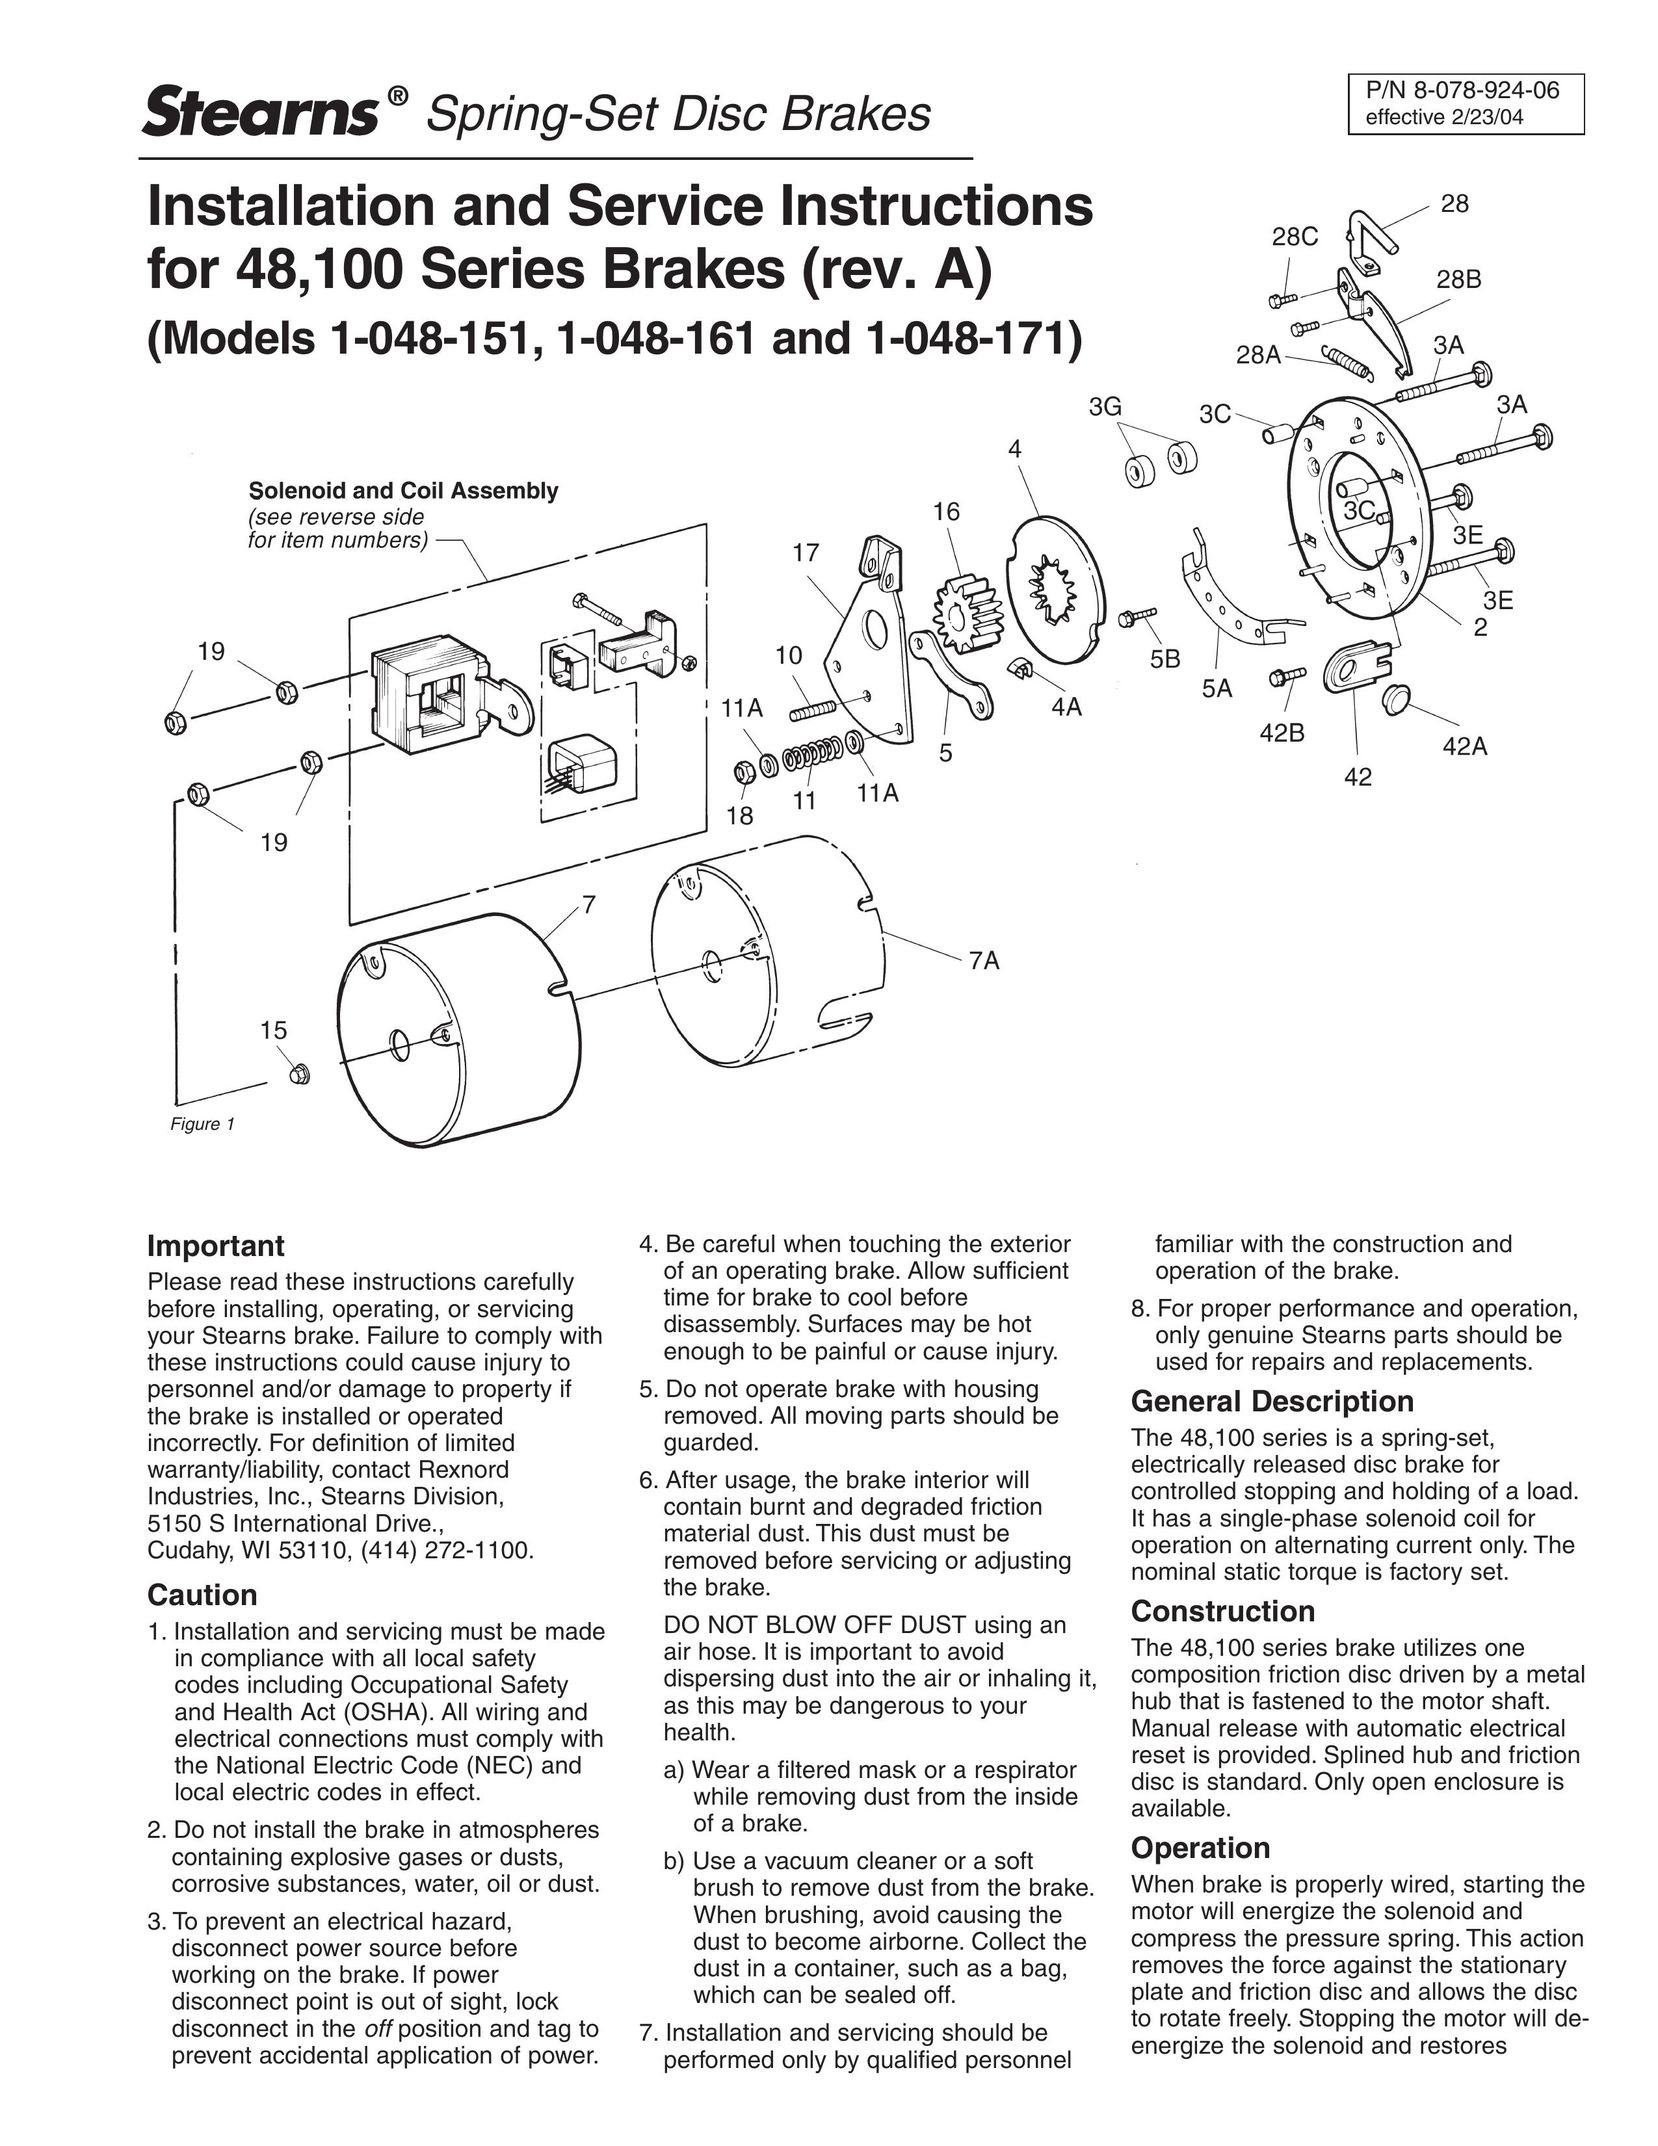 Stearns 1-048-171 Nail Gun User Manual